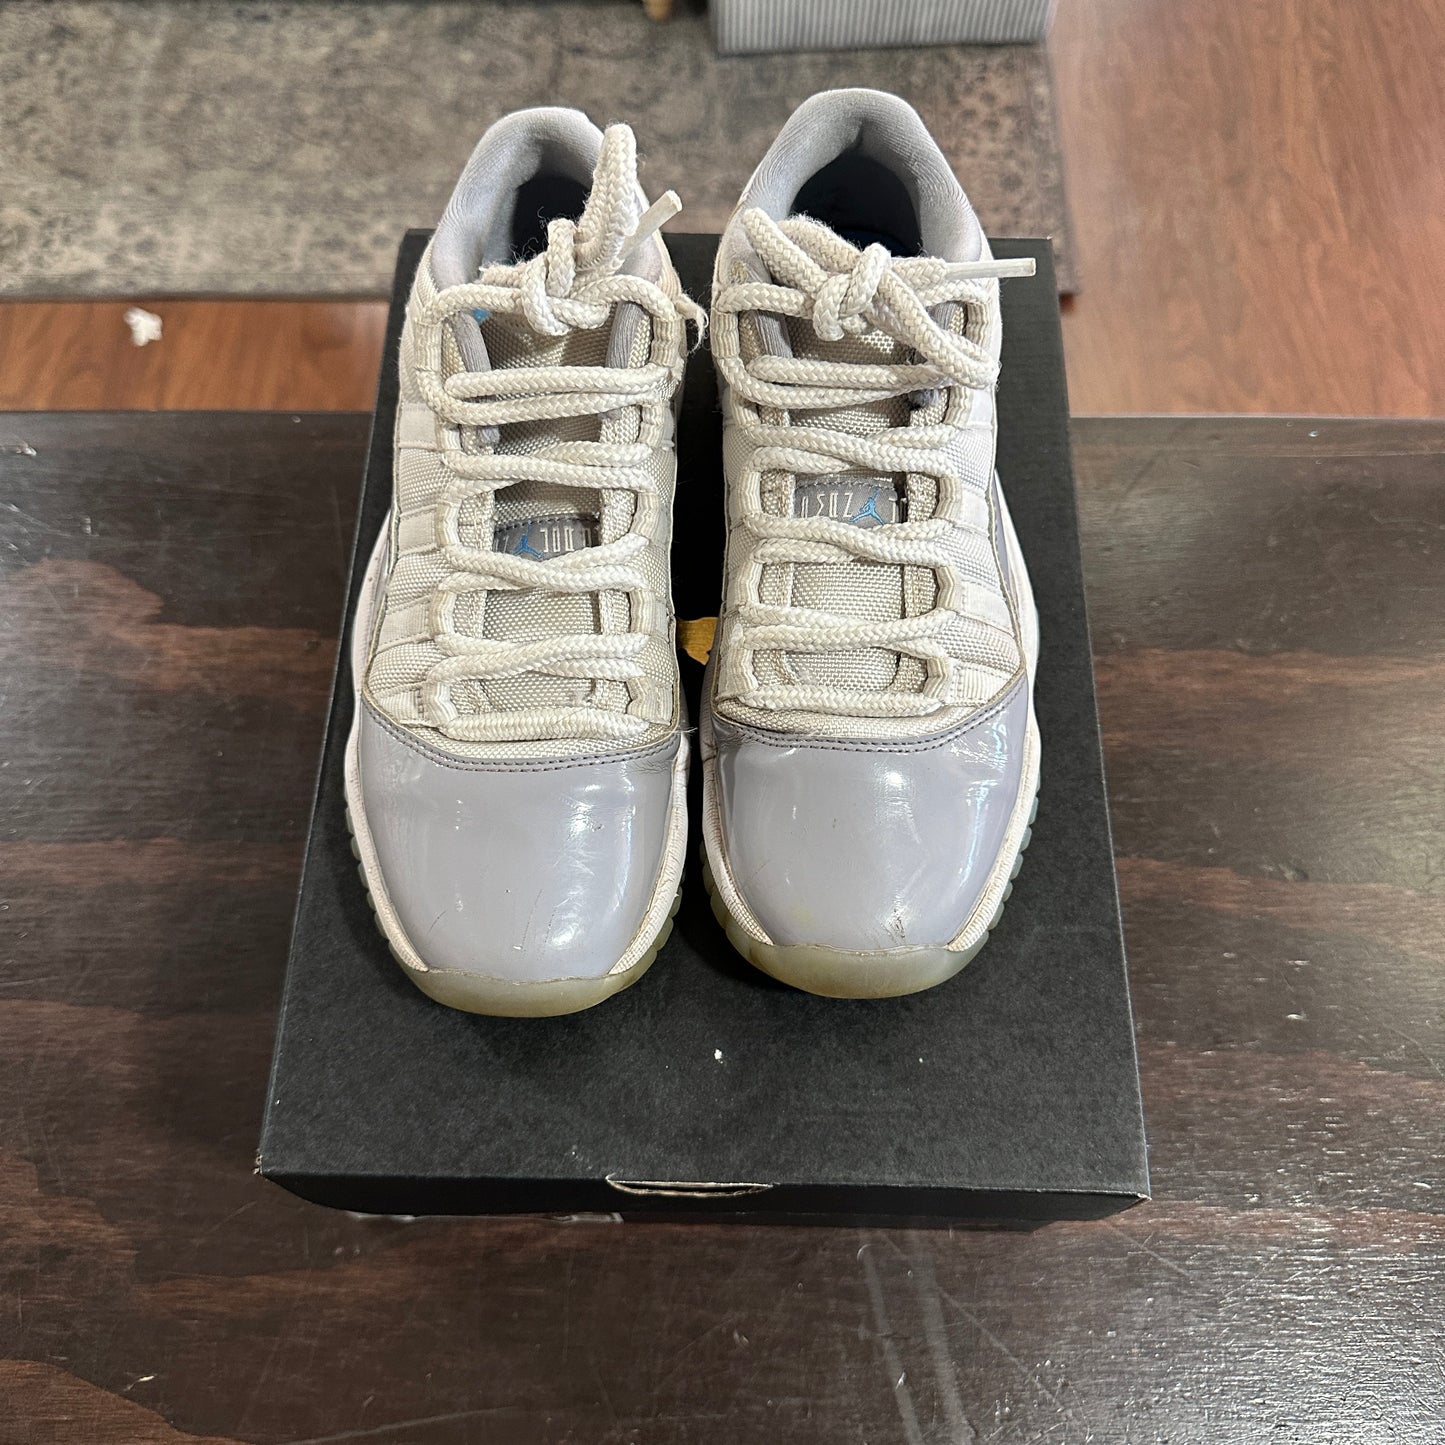 *USED* Air Jordan 11 Low Cement Grey (Size 5Y)